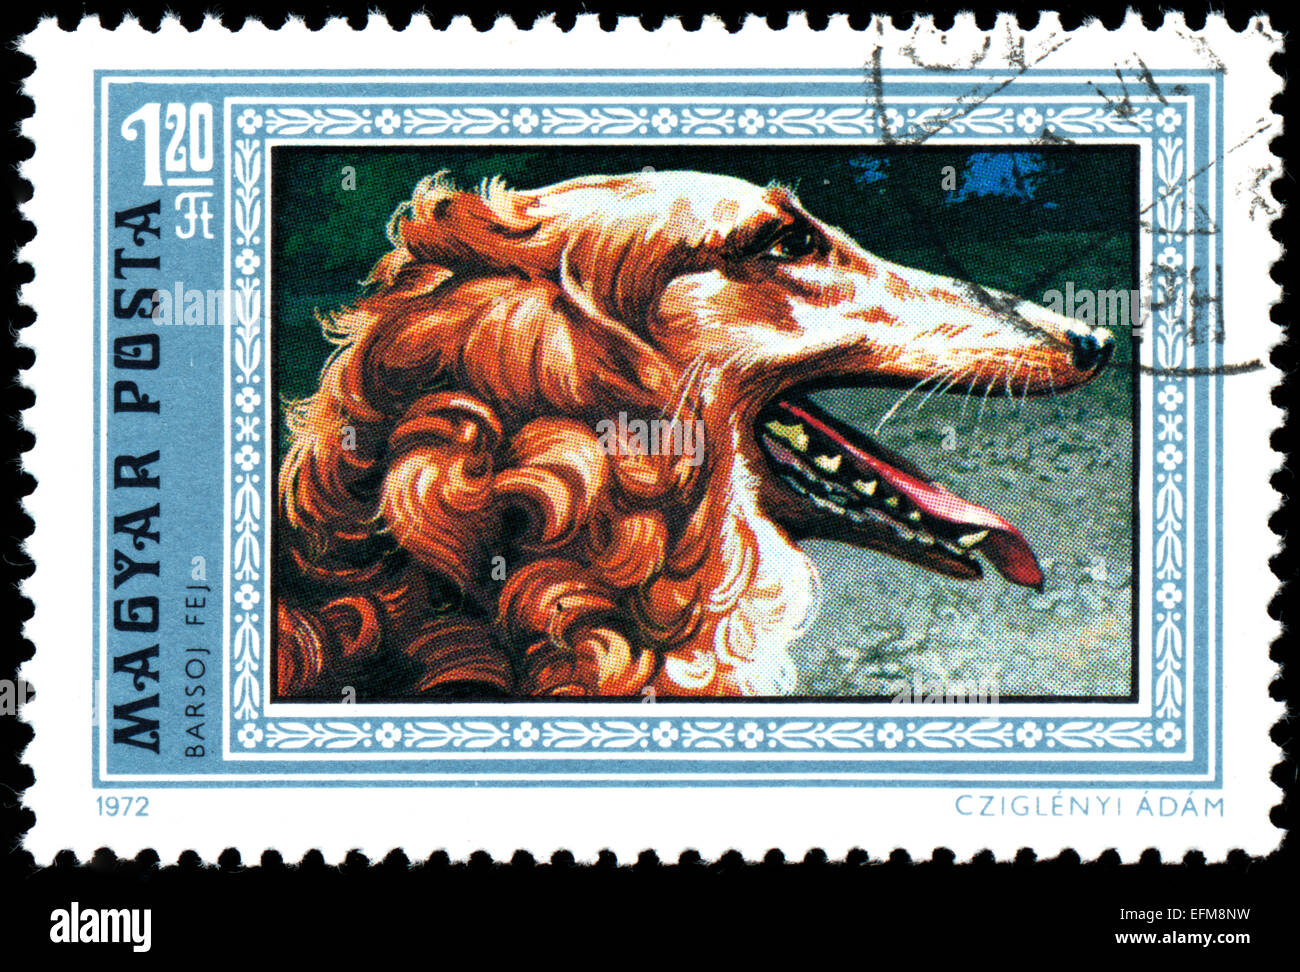 HUNGARY - CIRCA 1972: Postage stamp printed in Hungary showing Greyhound, circa 1972. Stock Photo